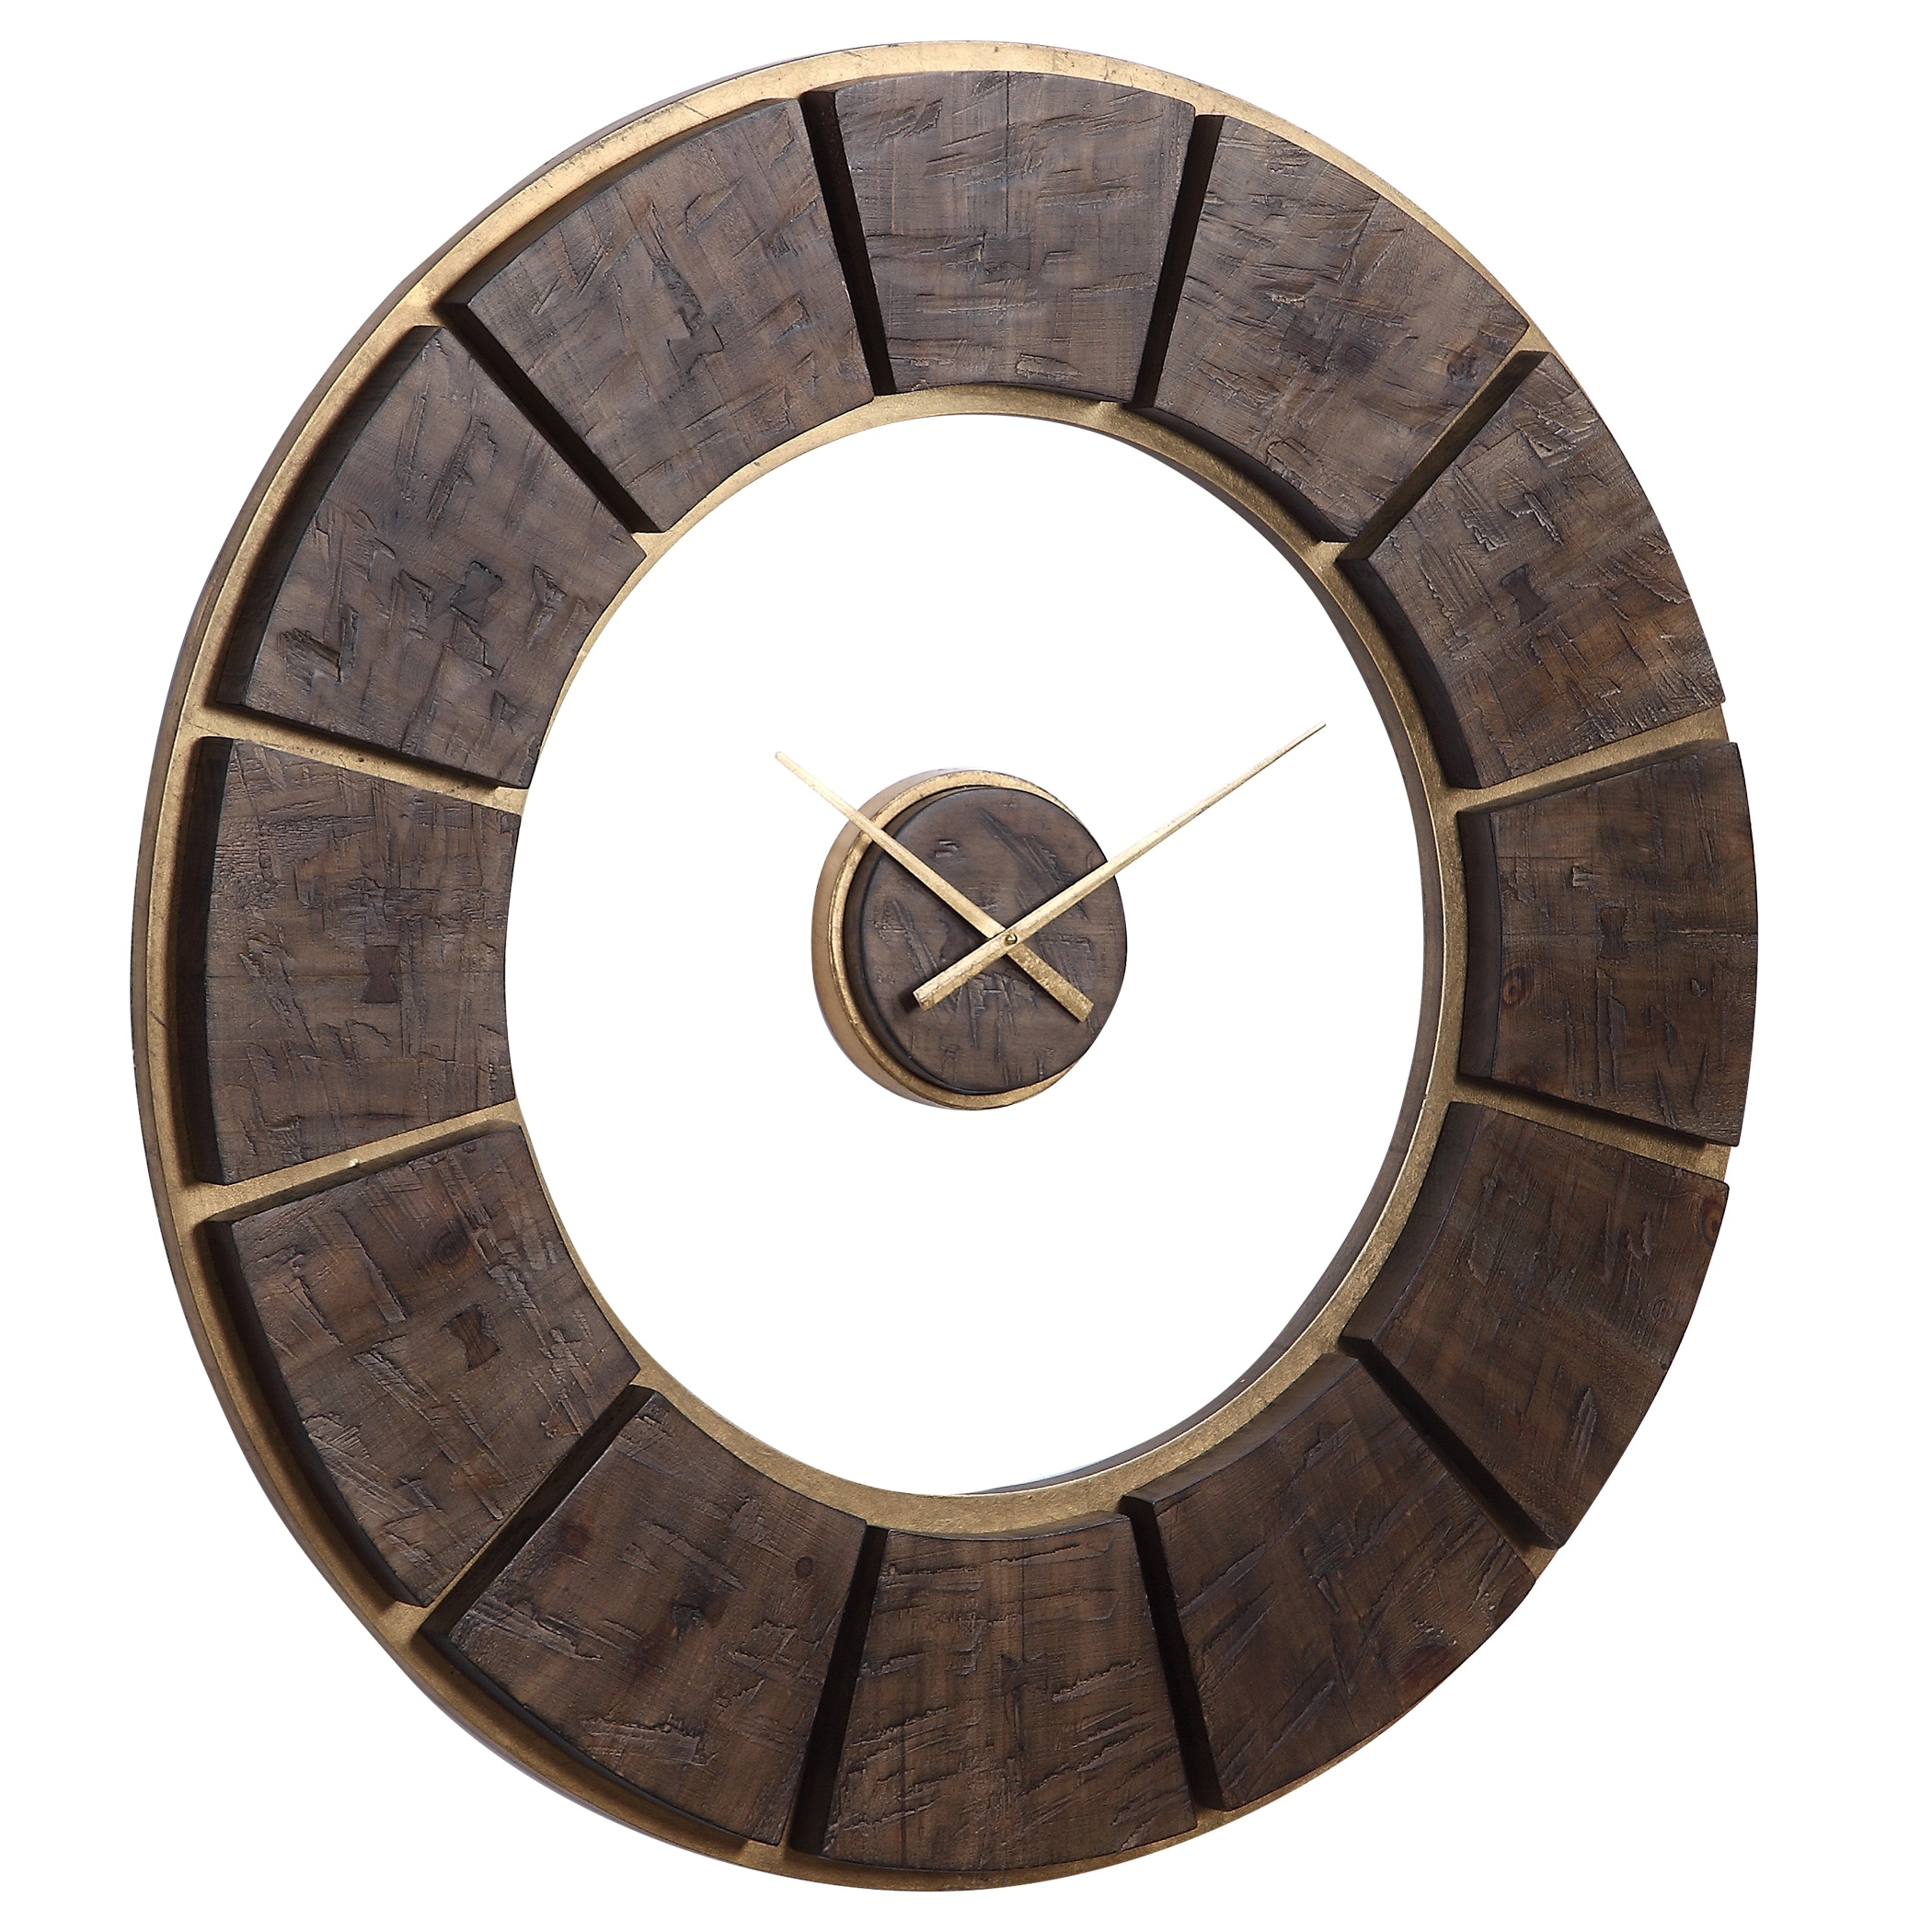 Uttermost Clocks Time Flies Modern Wall Clock 06106 - FX Marcotte Furniture  - Lewiston, ME